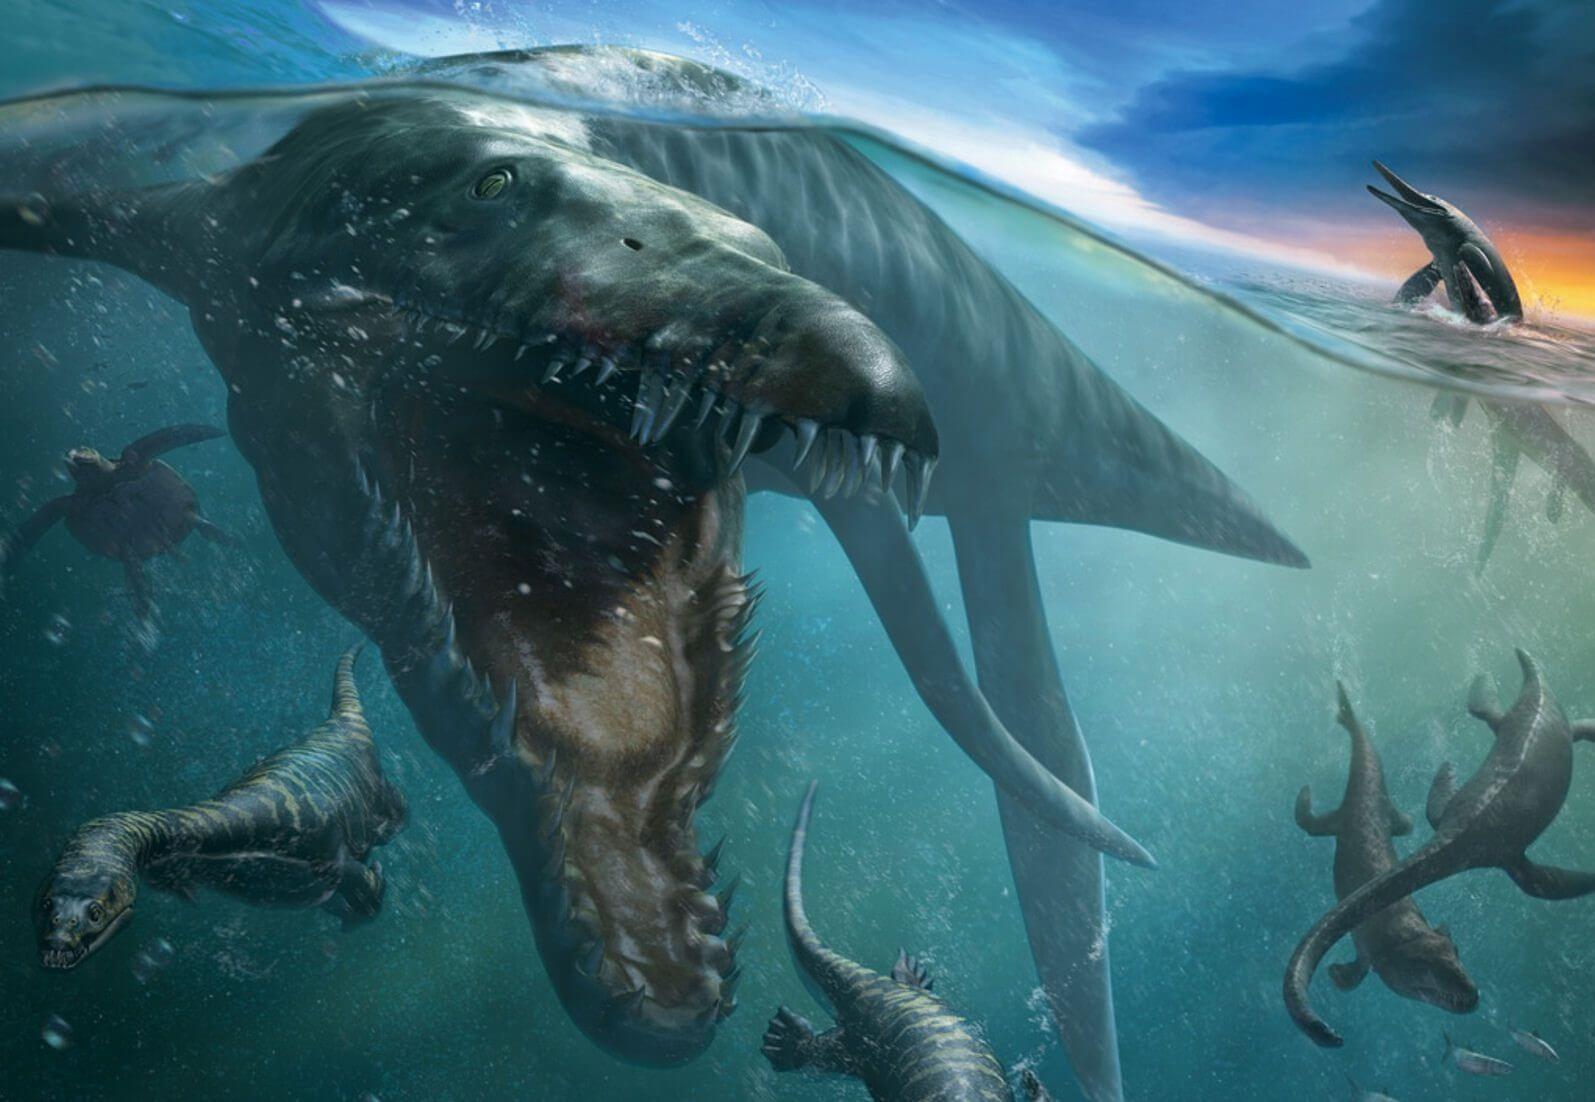 A digital illustration of a pliosaurus hunting for prey in the ocean.